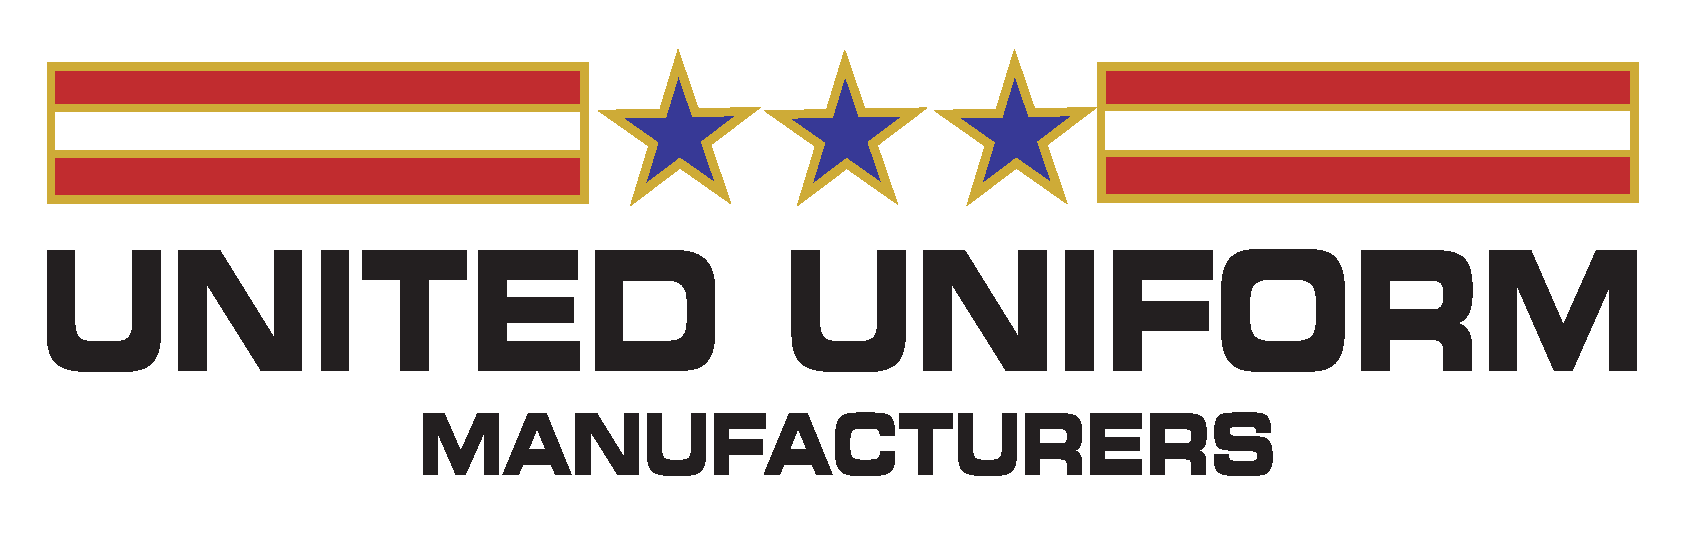 United Uniform Manufacturers